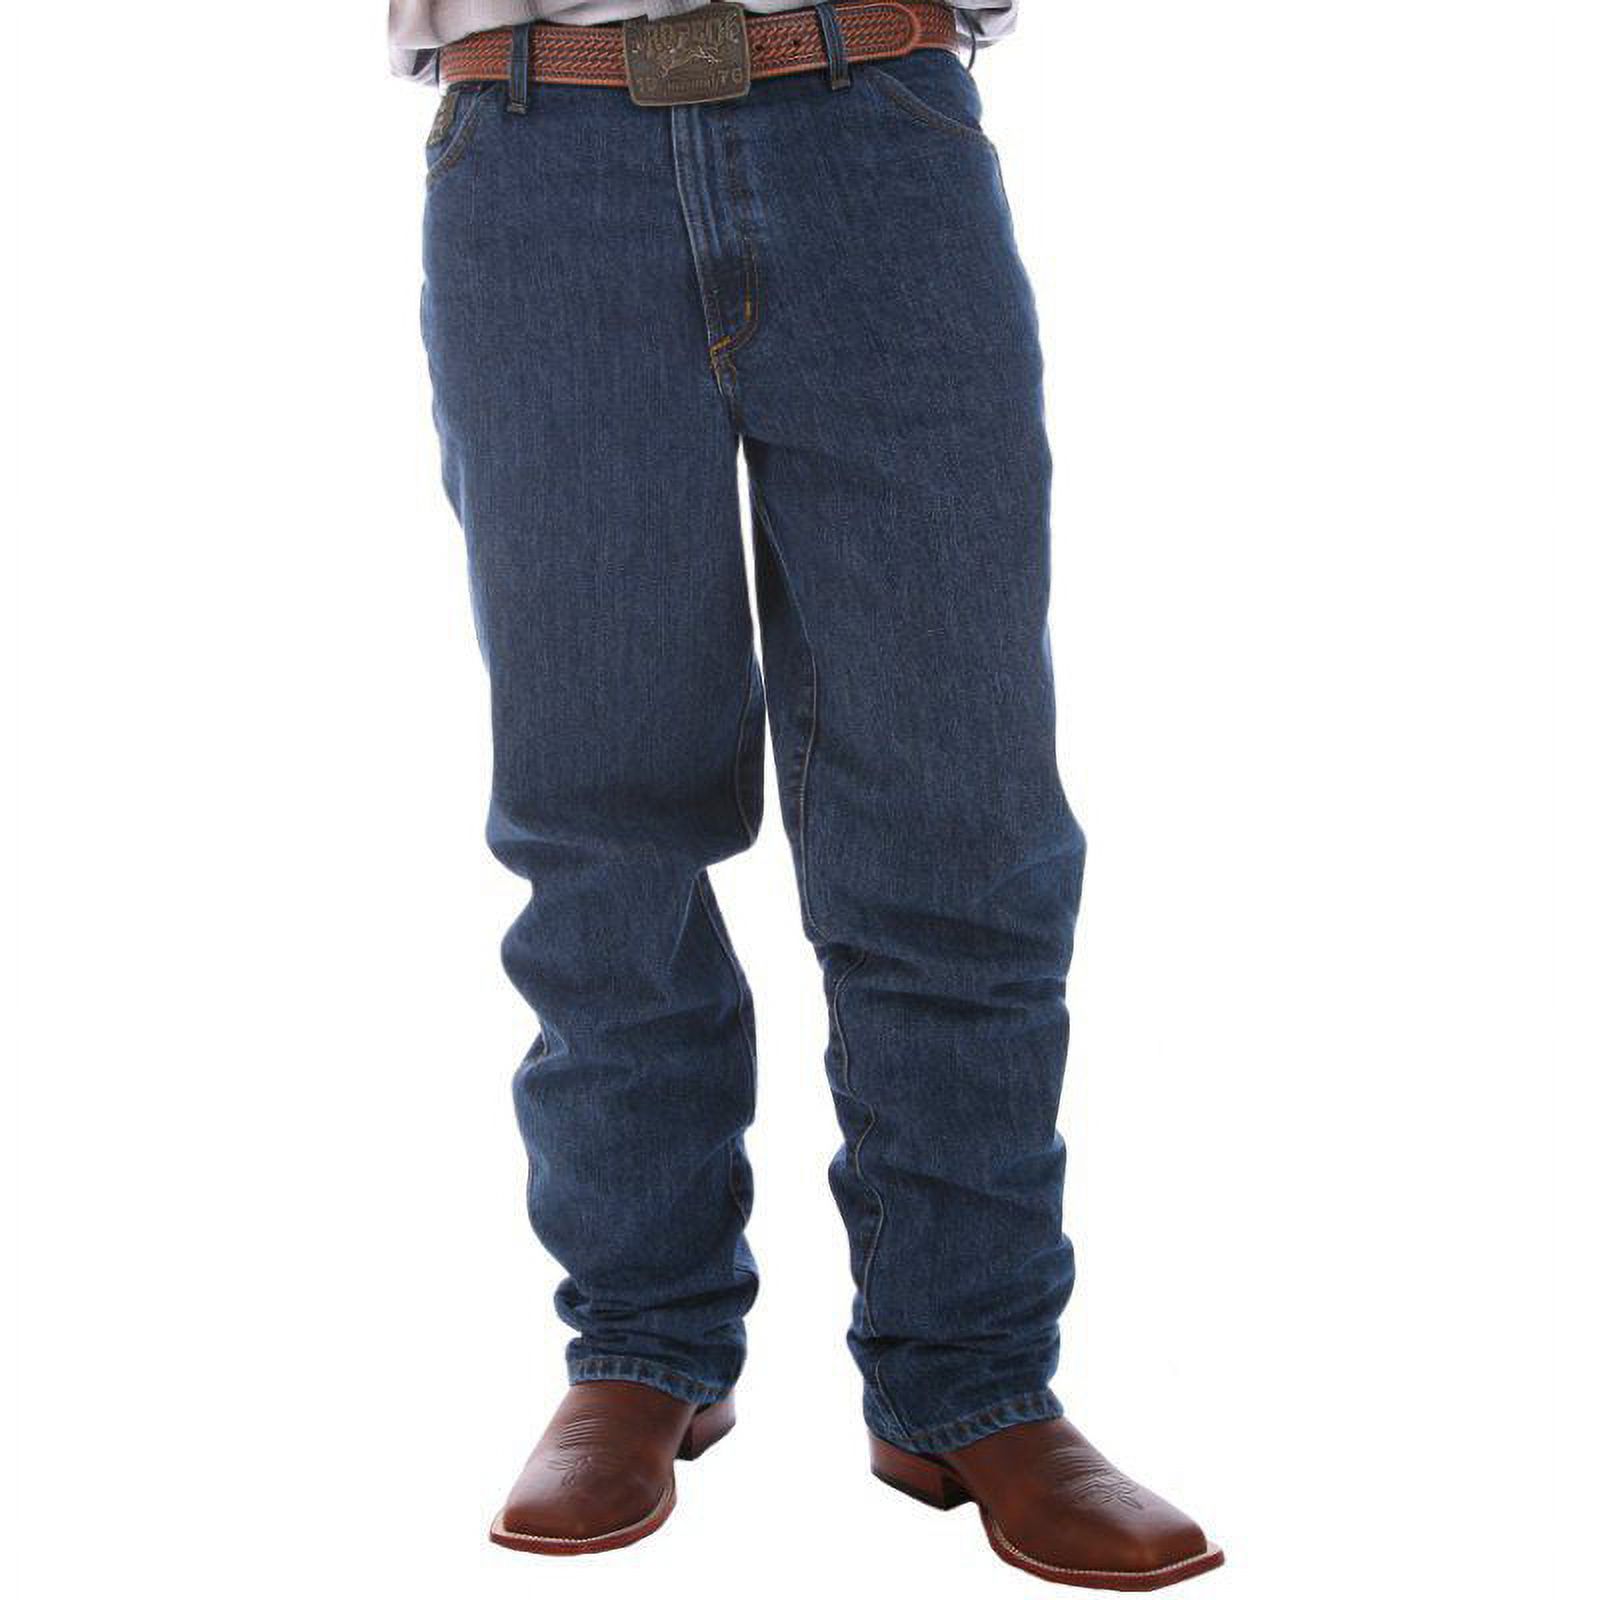 Cinch Apparel Mens Green Label Original Fit Jeans 40x30 Dark Stonewash - image 4 of 4